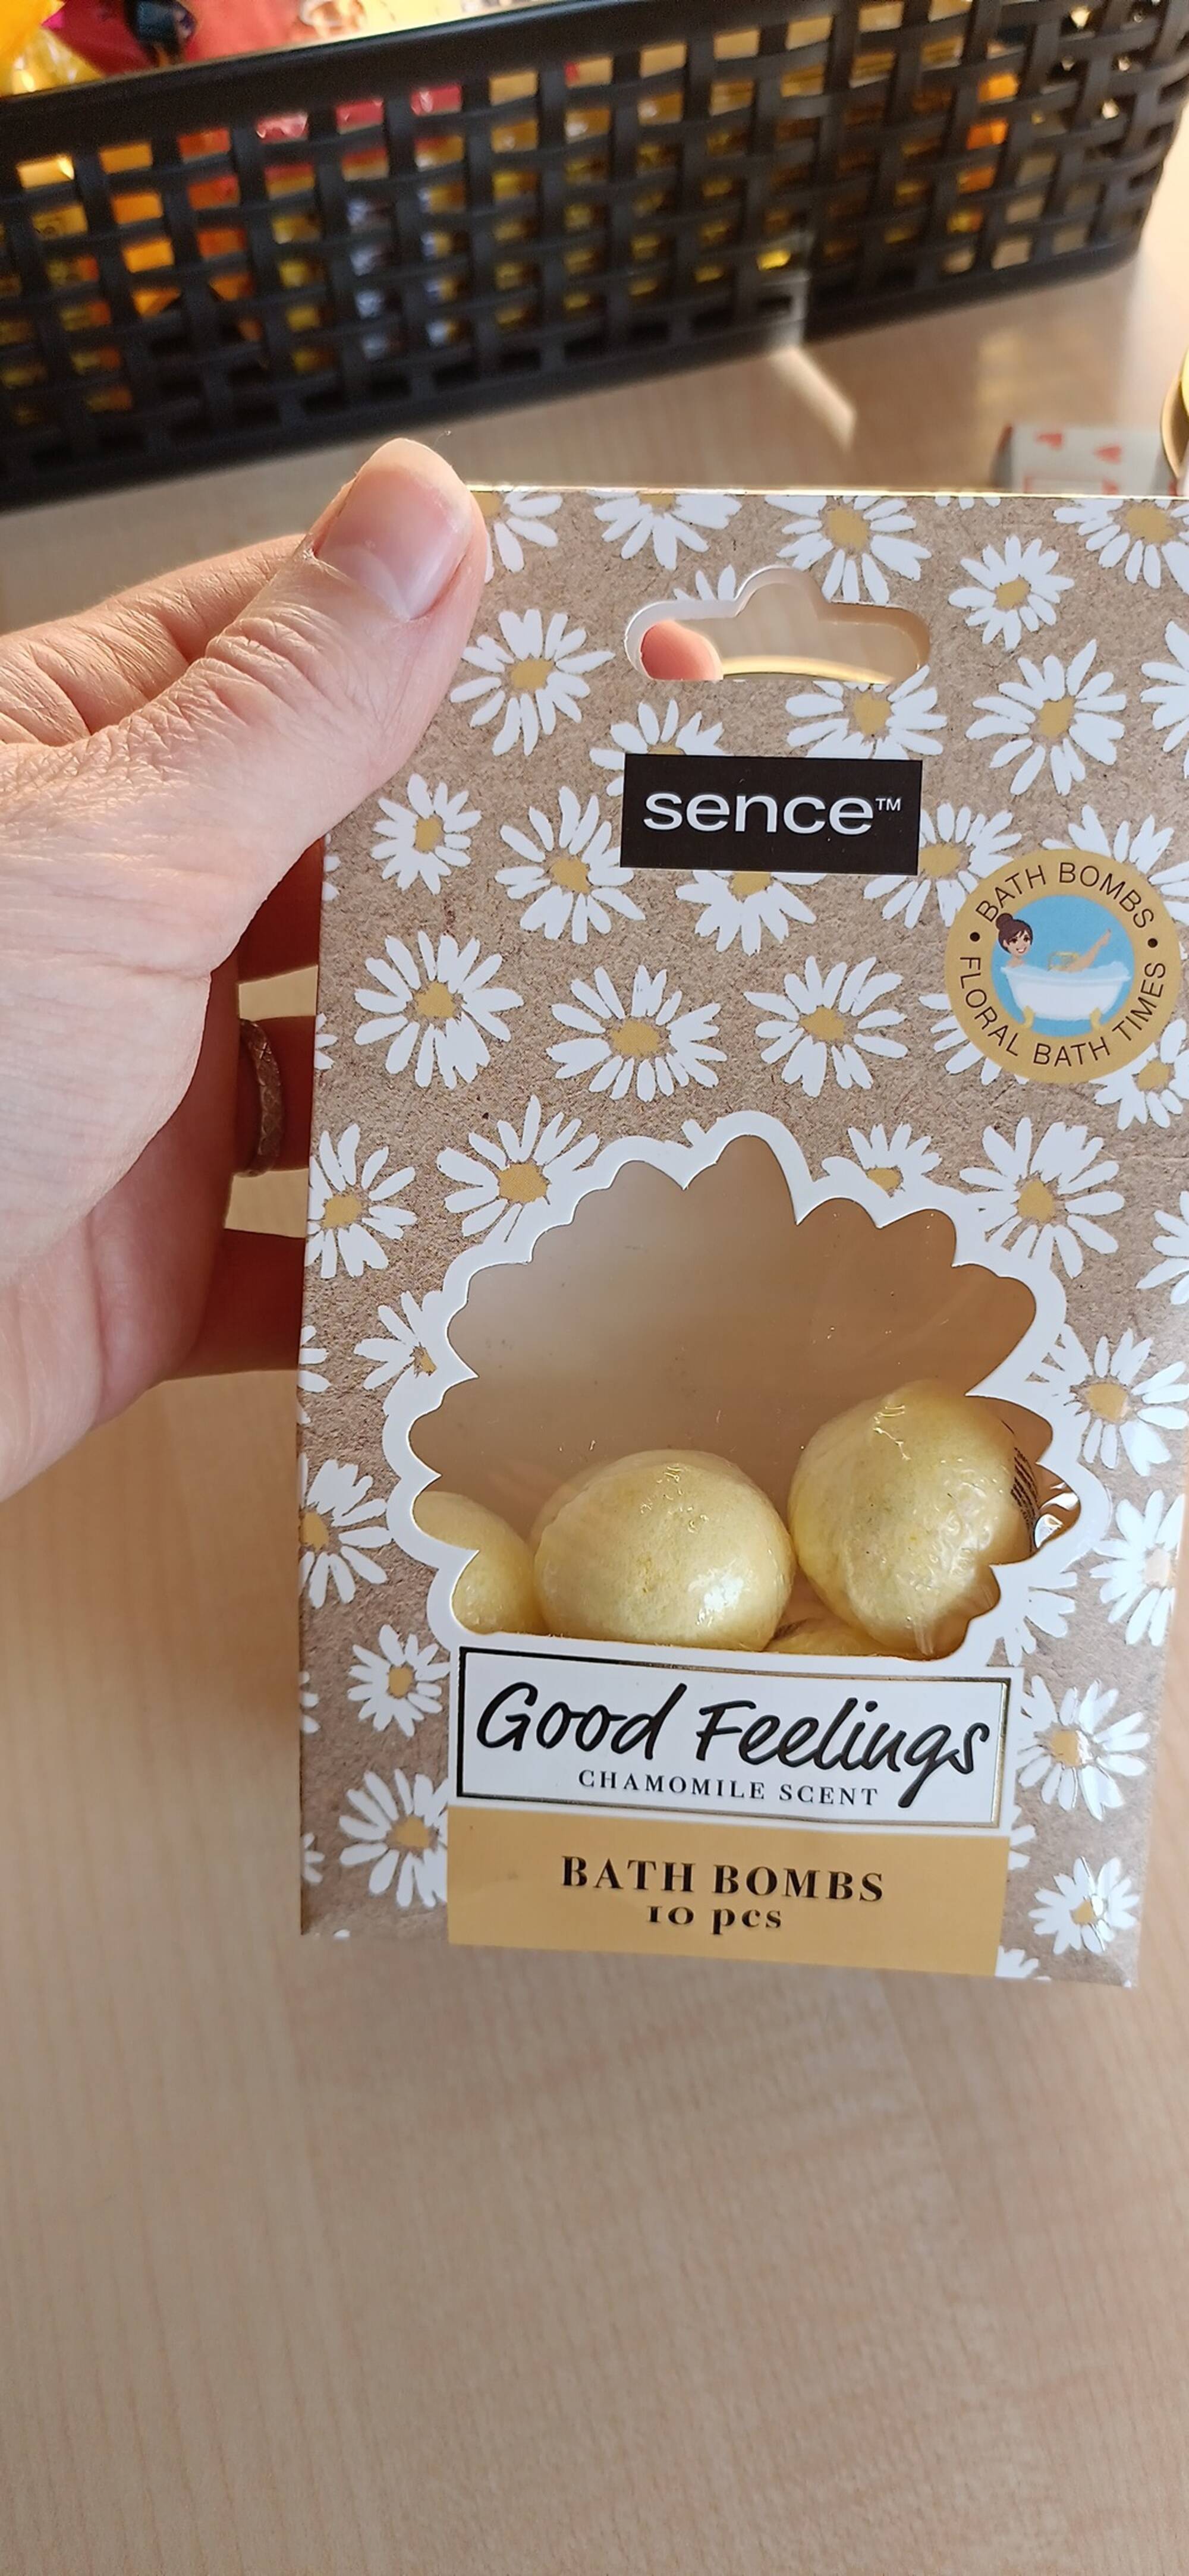 SENCE - Good feelings - 10 pcs bath bombs chamomille scent